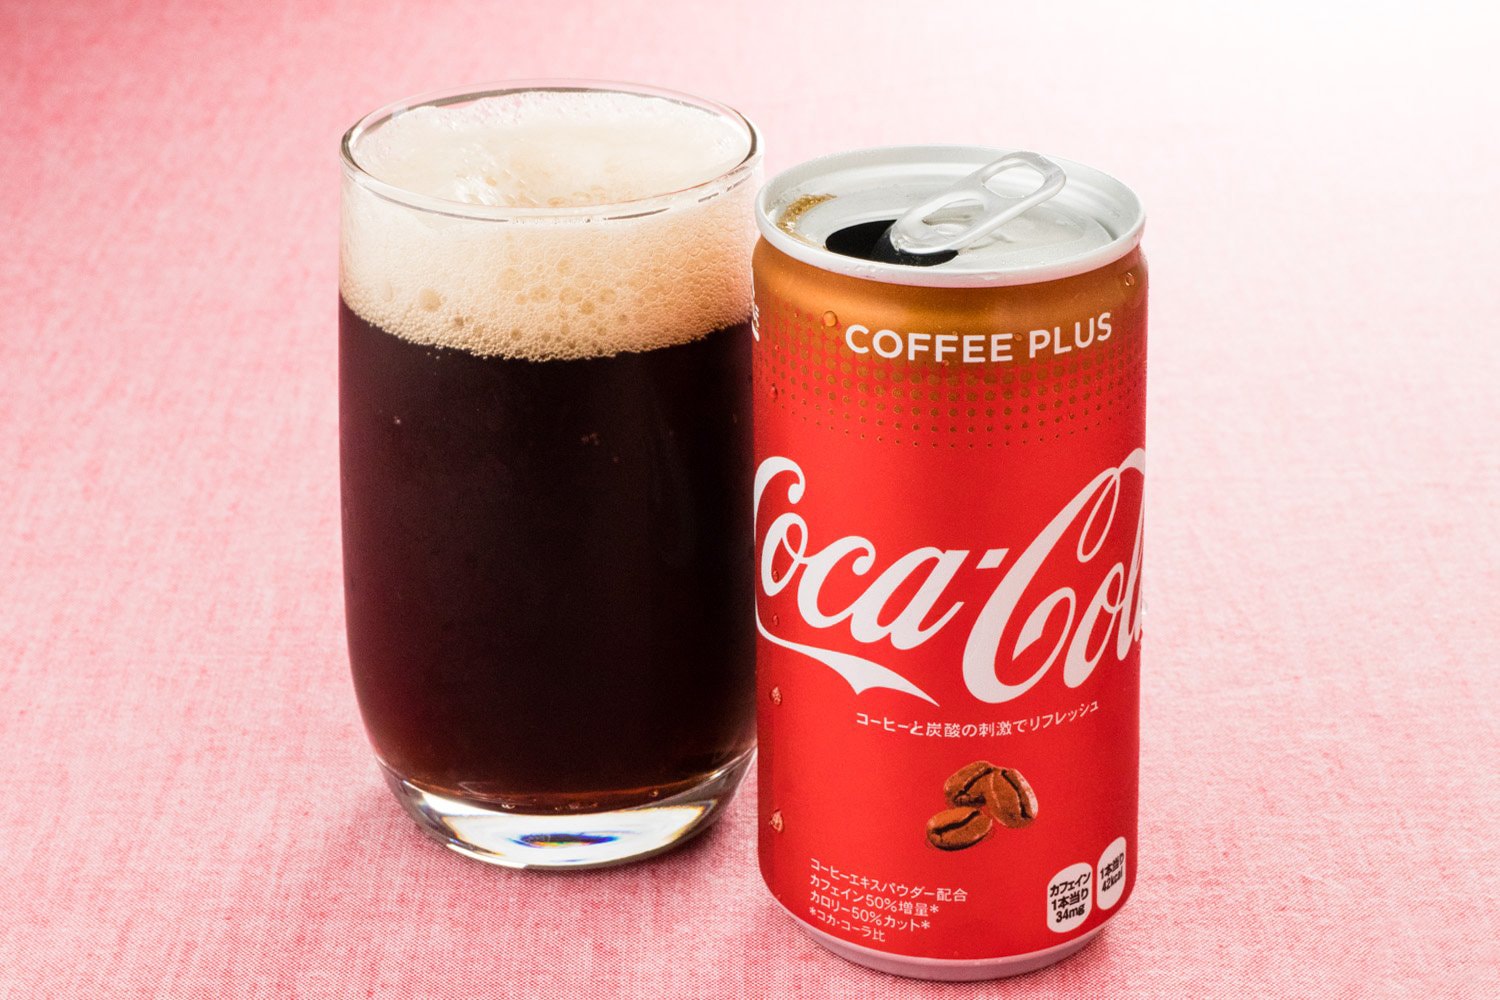 Coca Cola Coffee Plus Coke BlāK Soda Soft Drink Japan Vending Machine Black